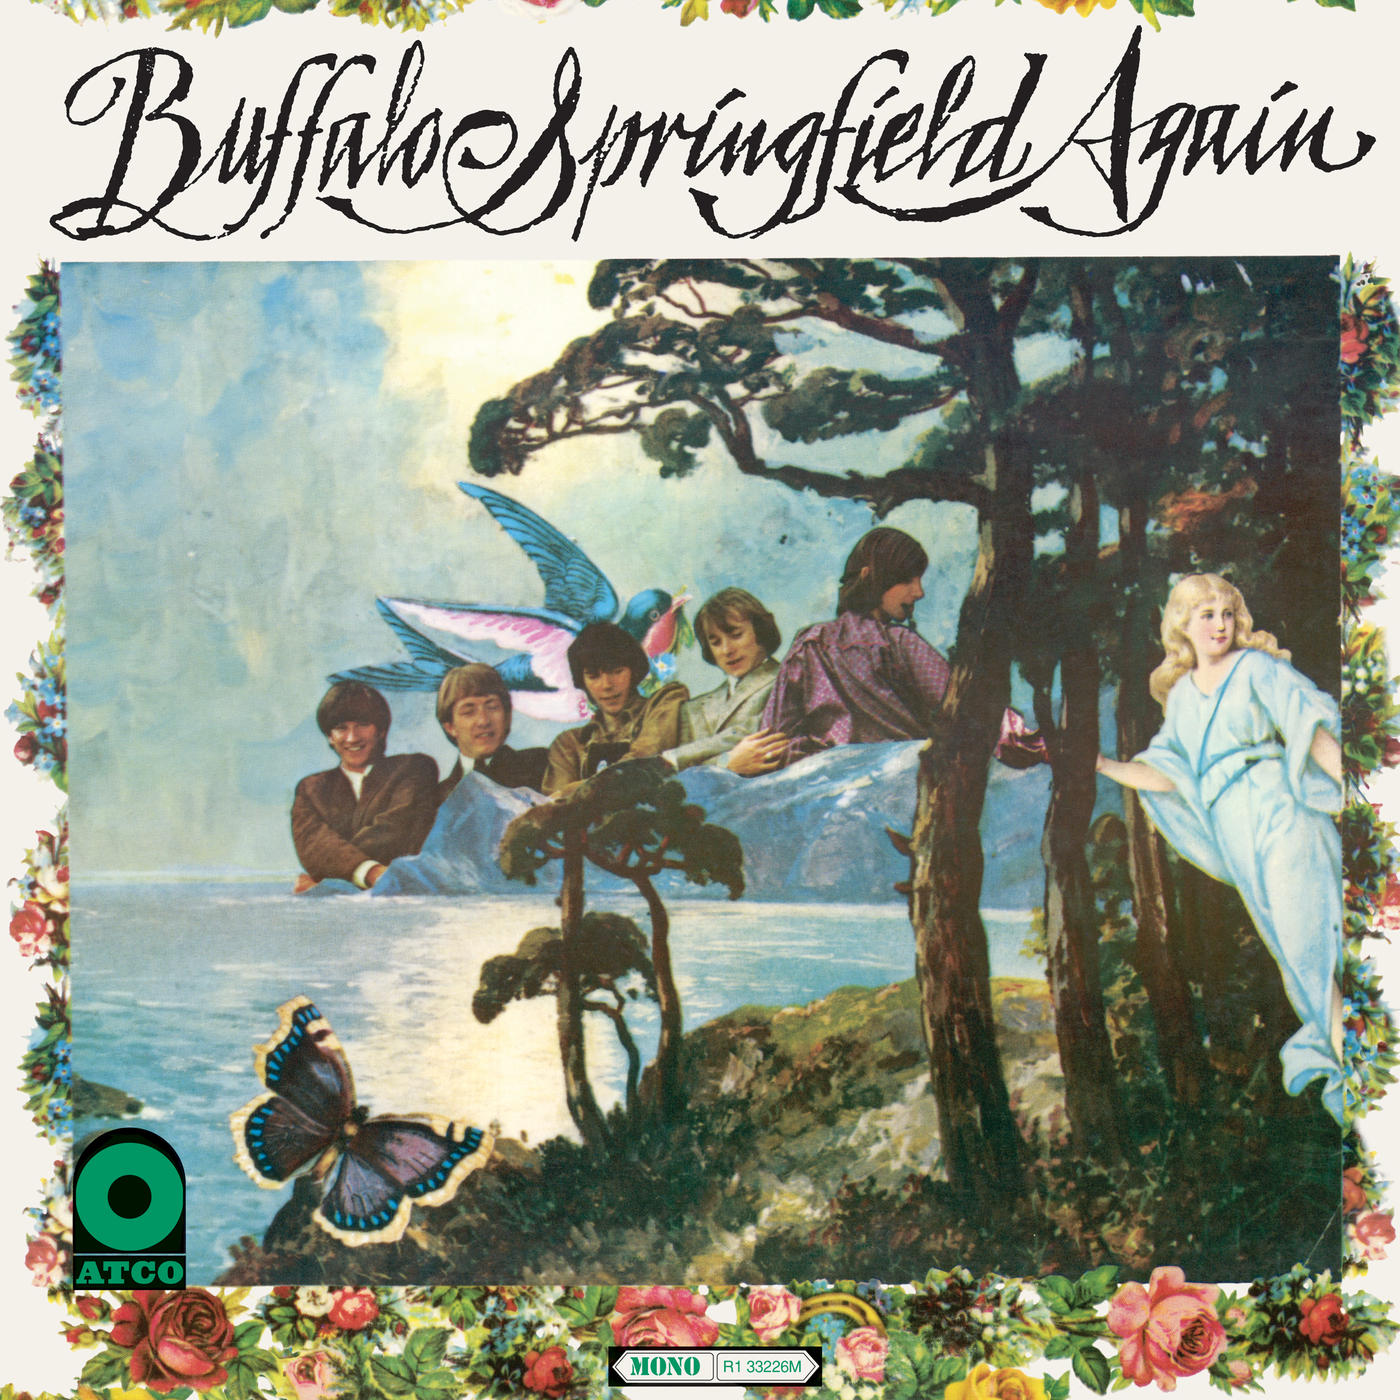 BUFFALO SPRINGFIELD - Buffalo Springfield Again (Rocktober 2023) - LP - Clear Vinyl [OCT 6]